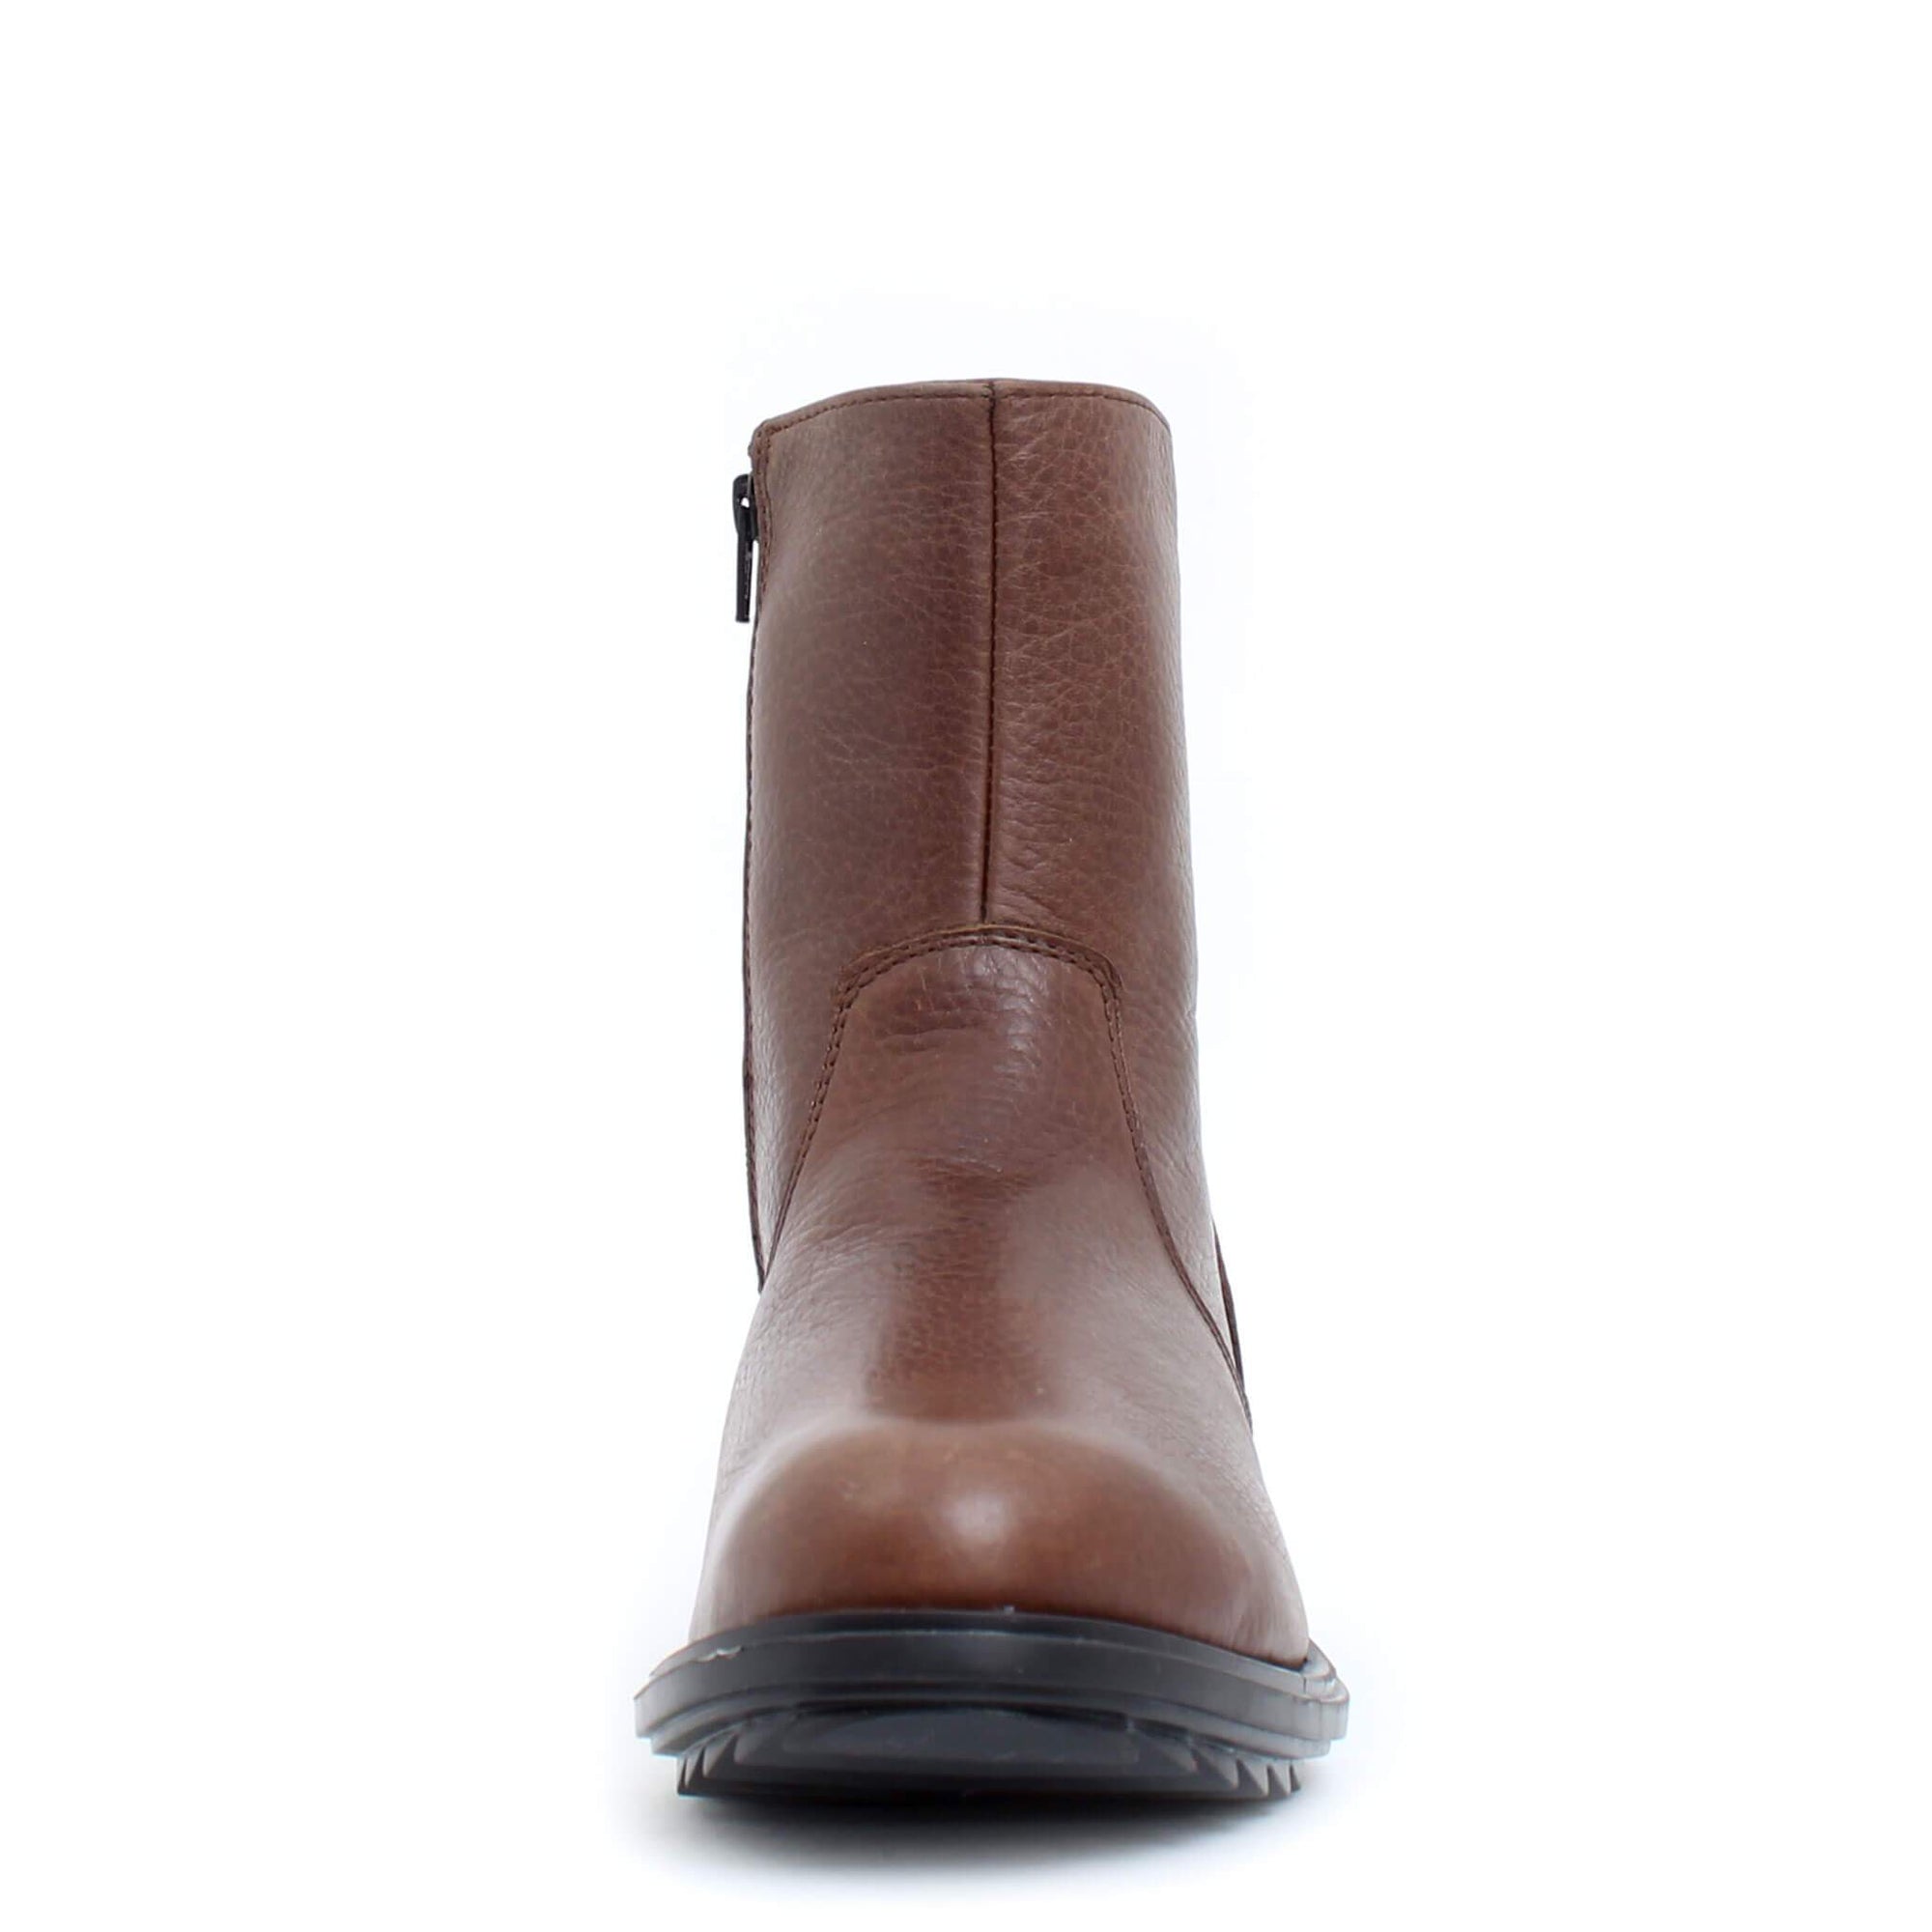 Martin winter boot for men - Brown 